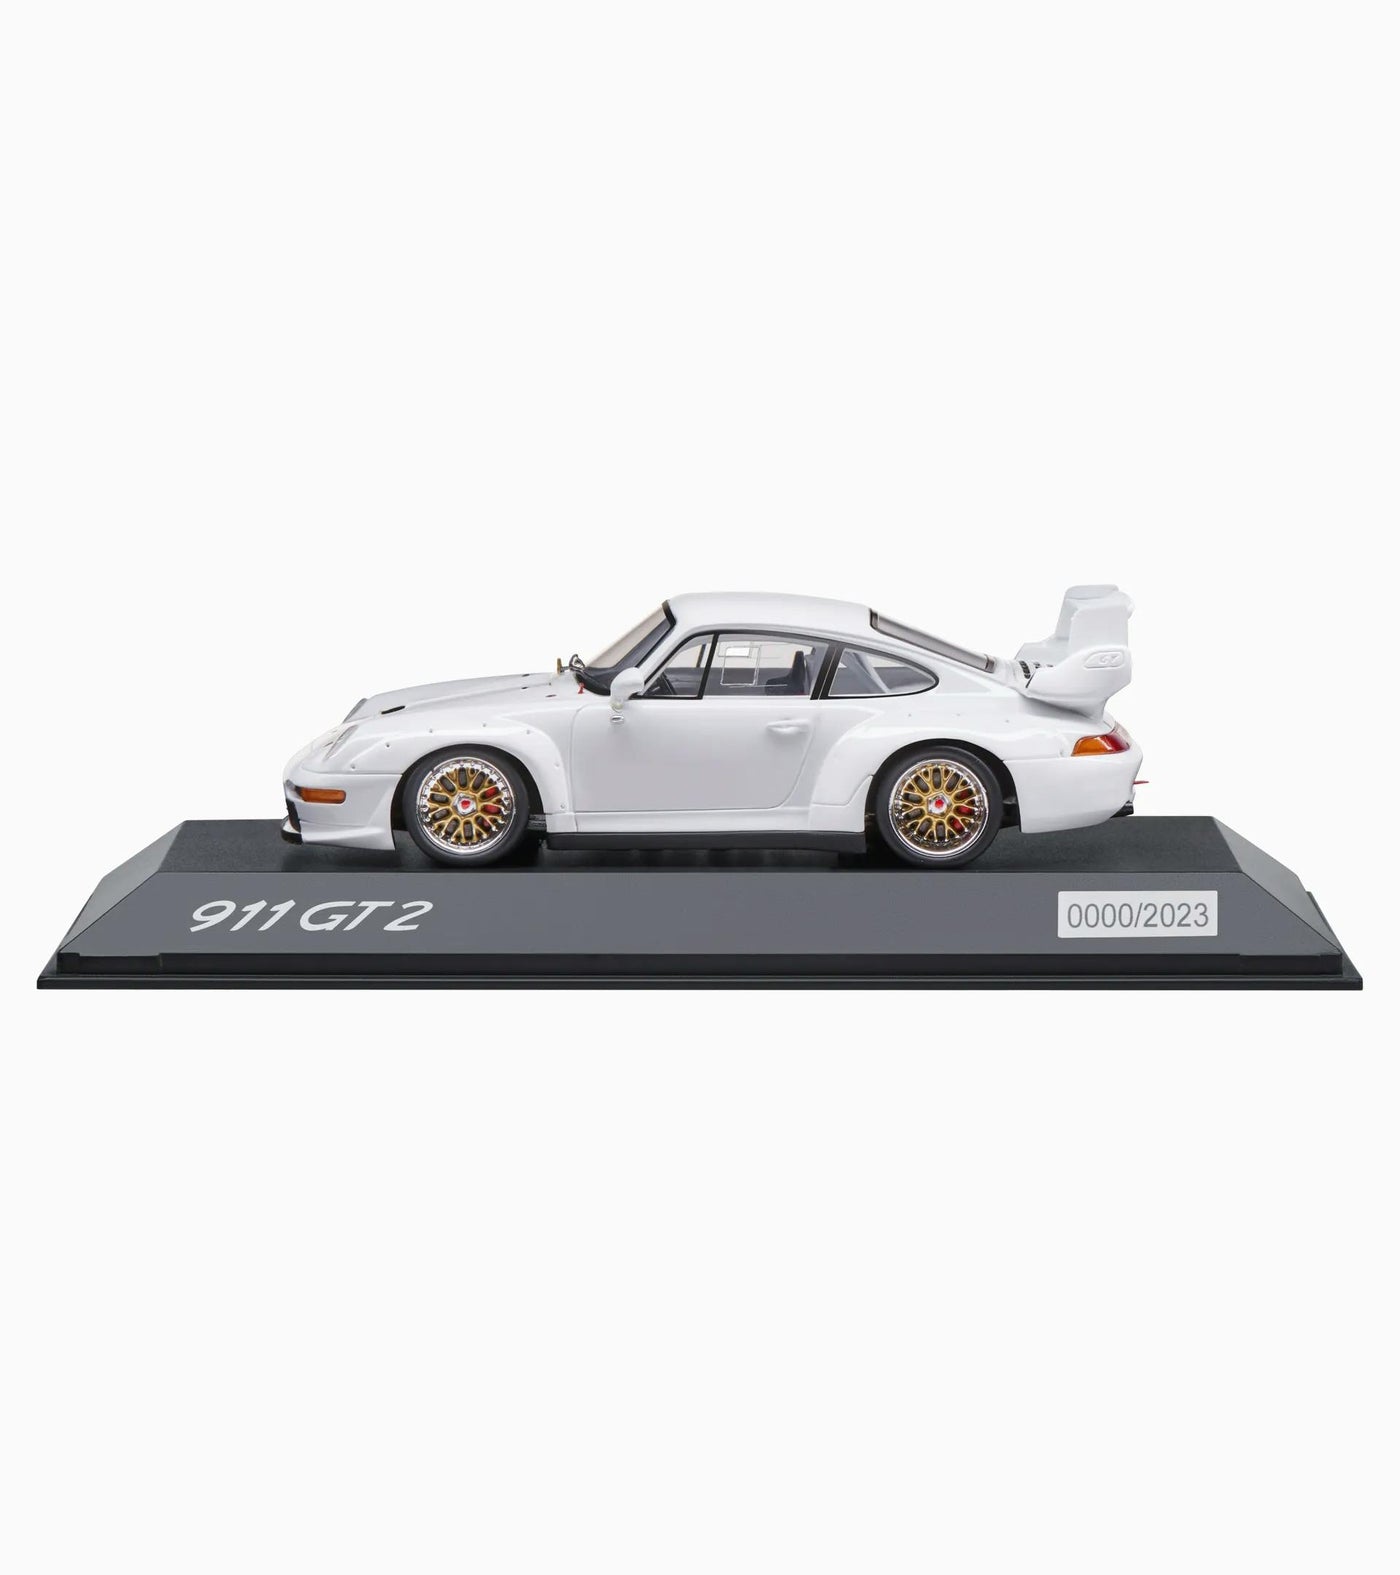 Porsche 911 GT2 (993) 1:43 Scale Model Car